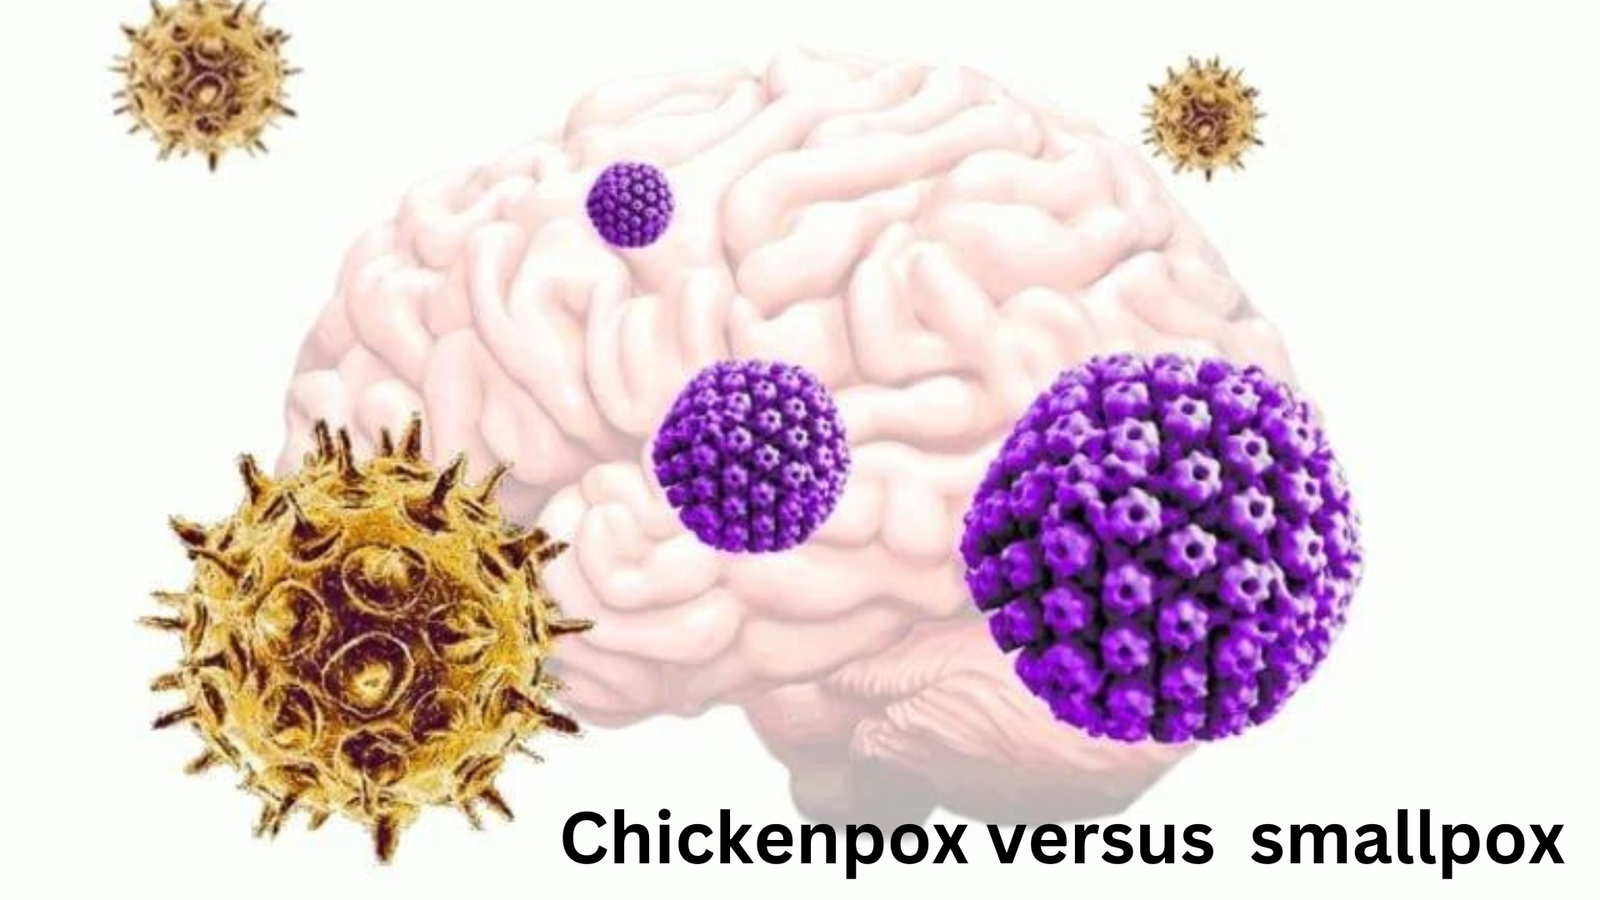 Chickenpox versus smallpox